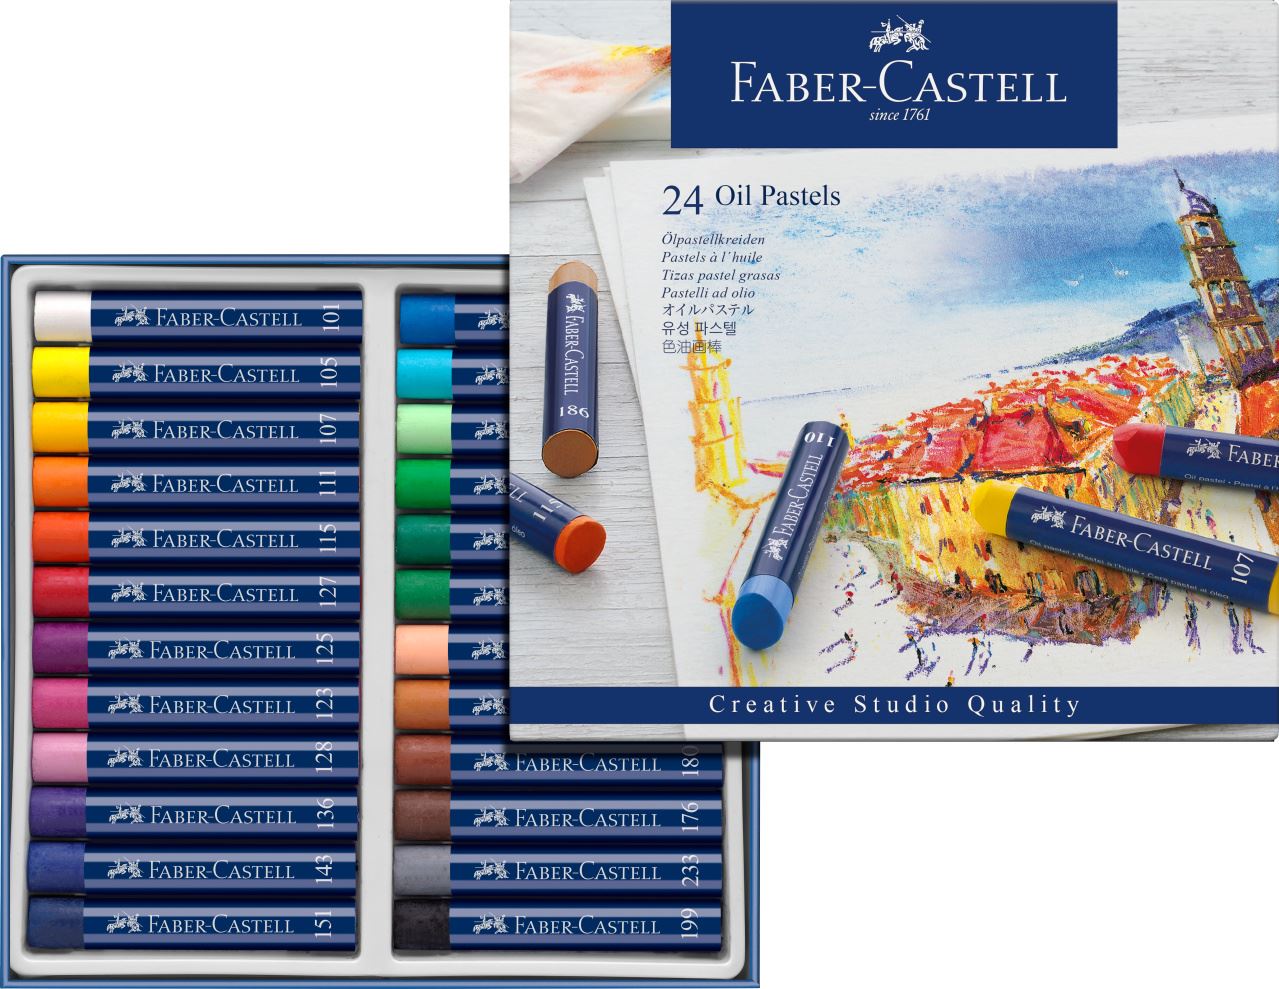 Faber-Castell - Oil Pastels Astuccio 24